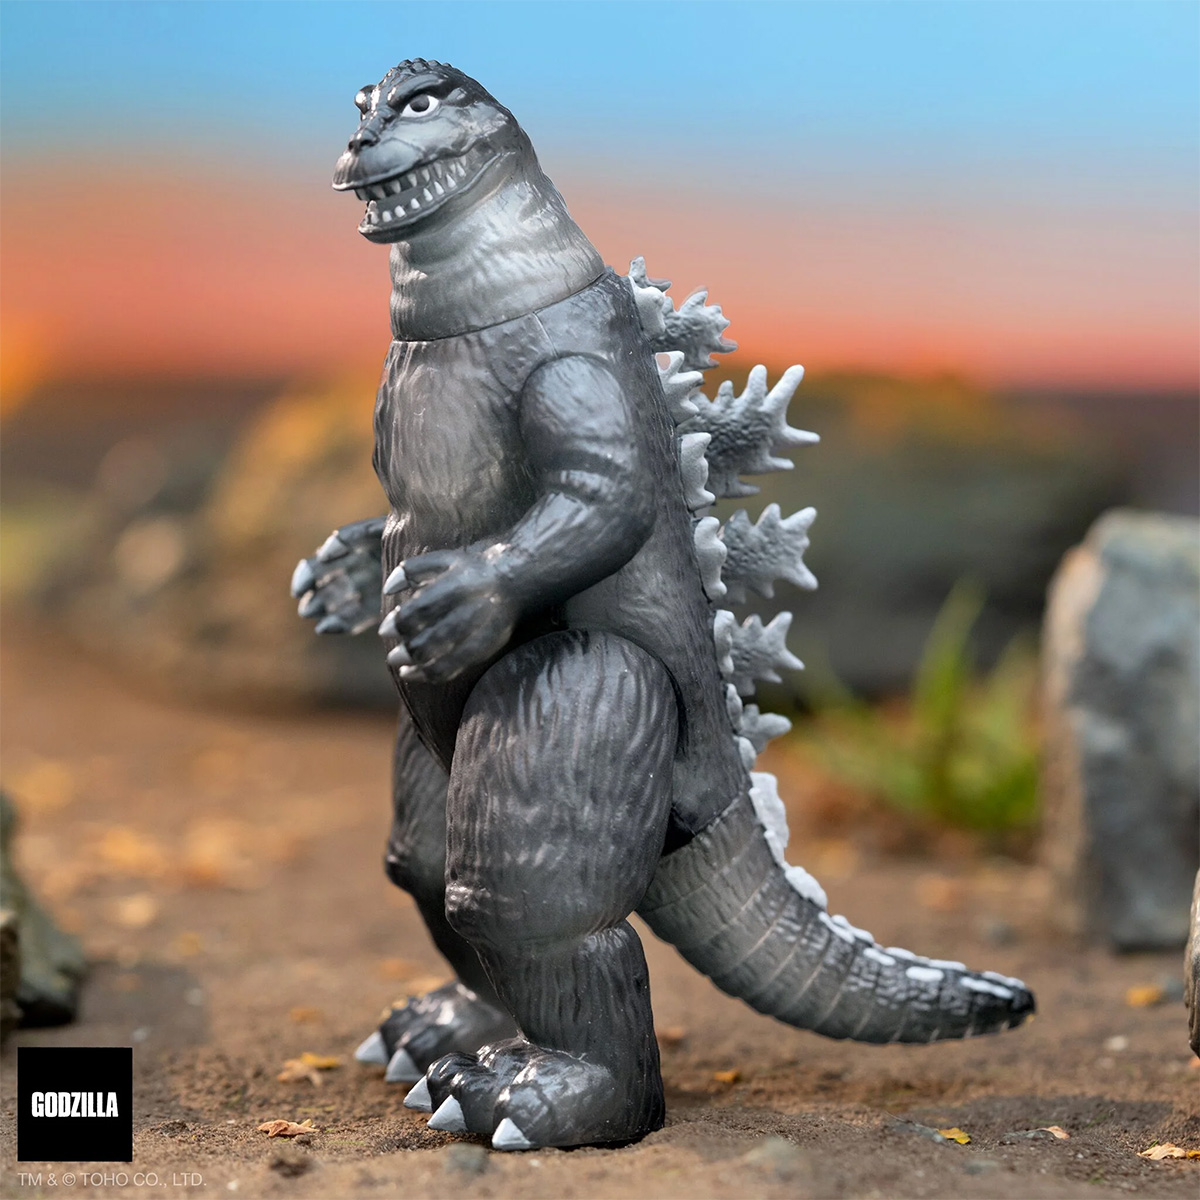 Action Figures Godzilla Kaiju (Silver Screen) Toho ReAction (Blind Box)